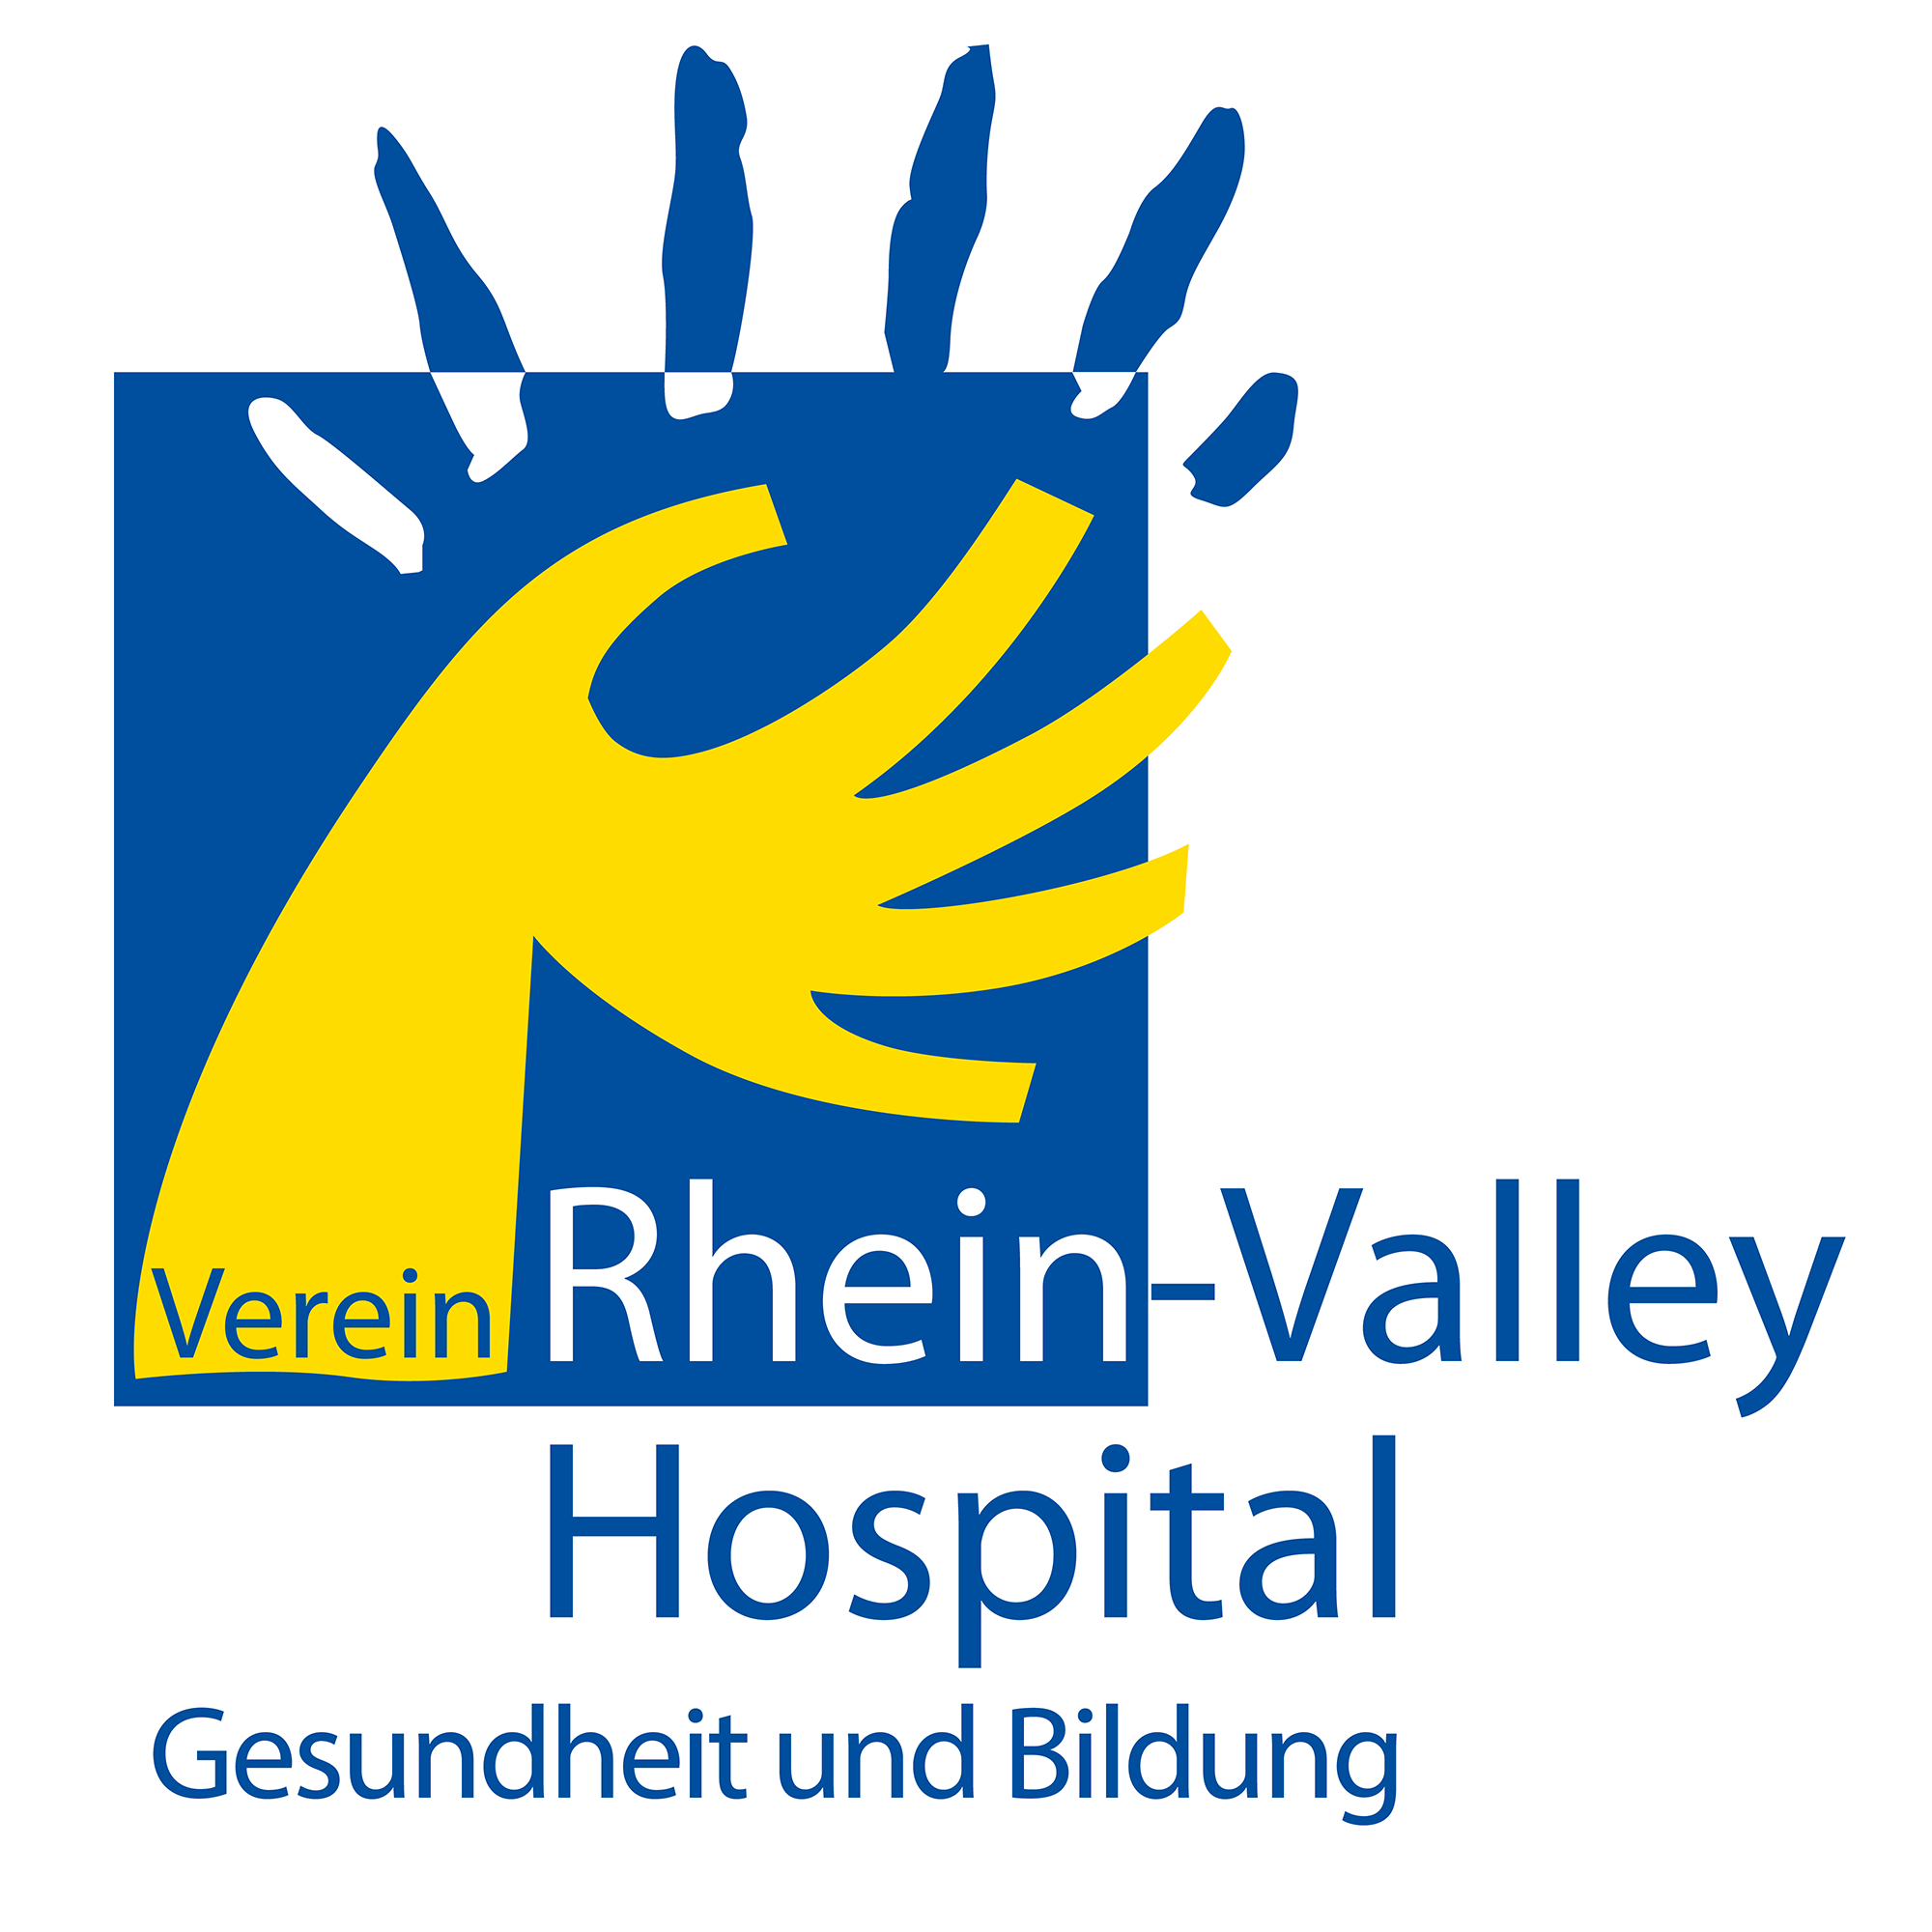 Rhein-Valley Hospital